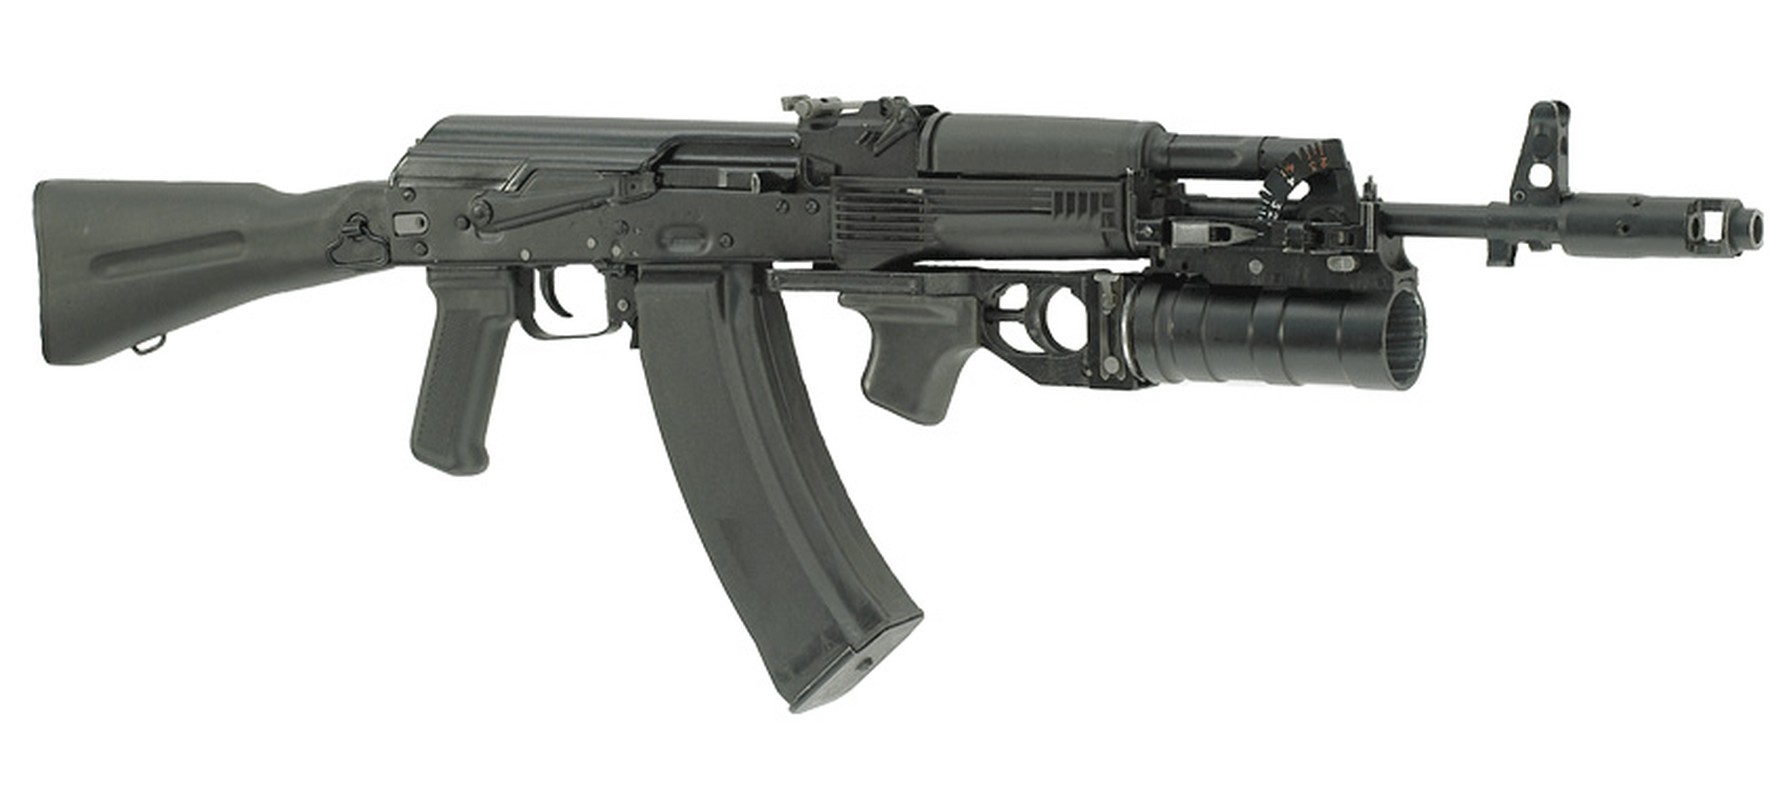 Nam 2019, sung AK-74 van dem loi nhuan “khung” cho nuoc Nga-Hinh-8